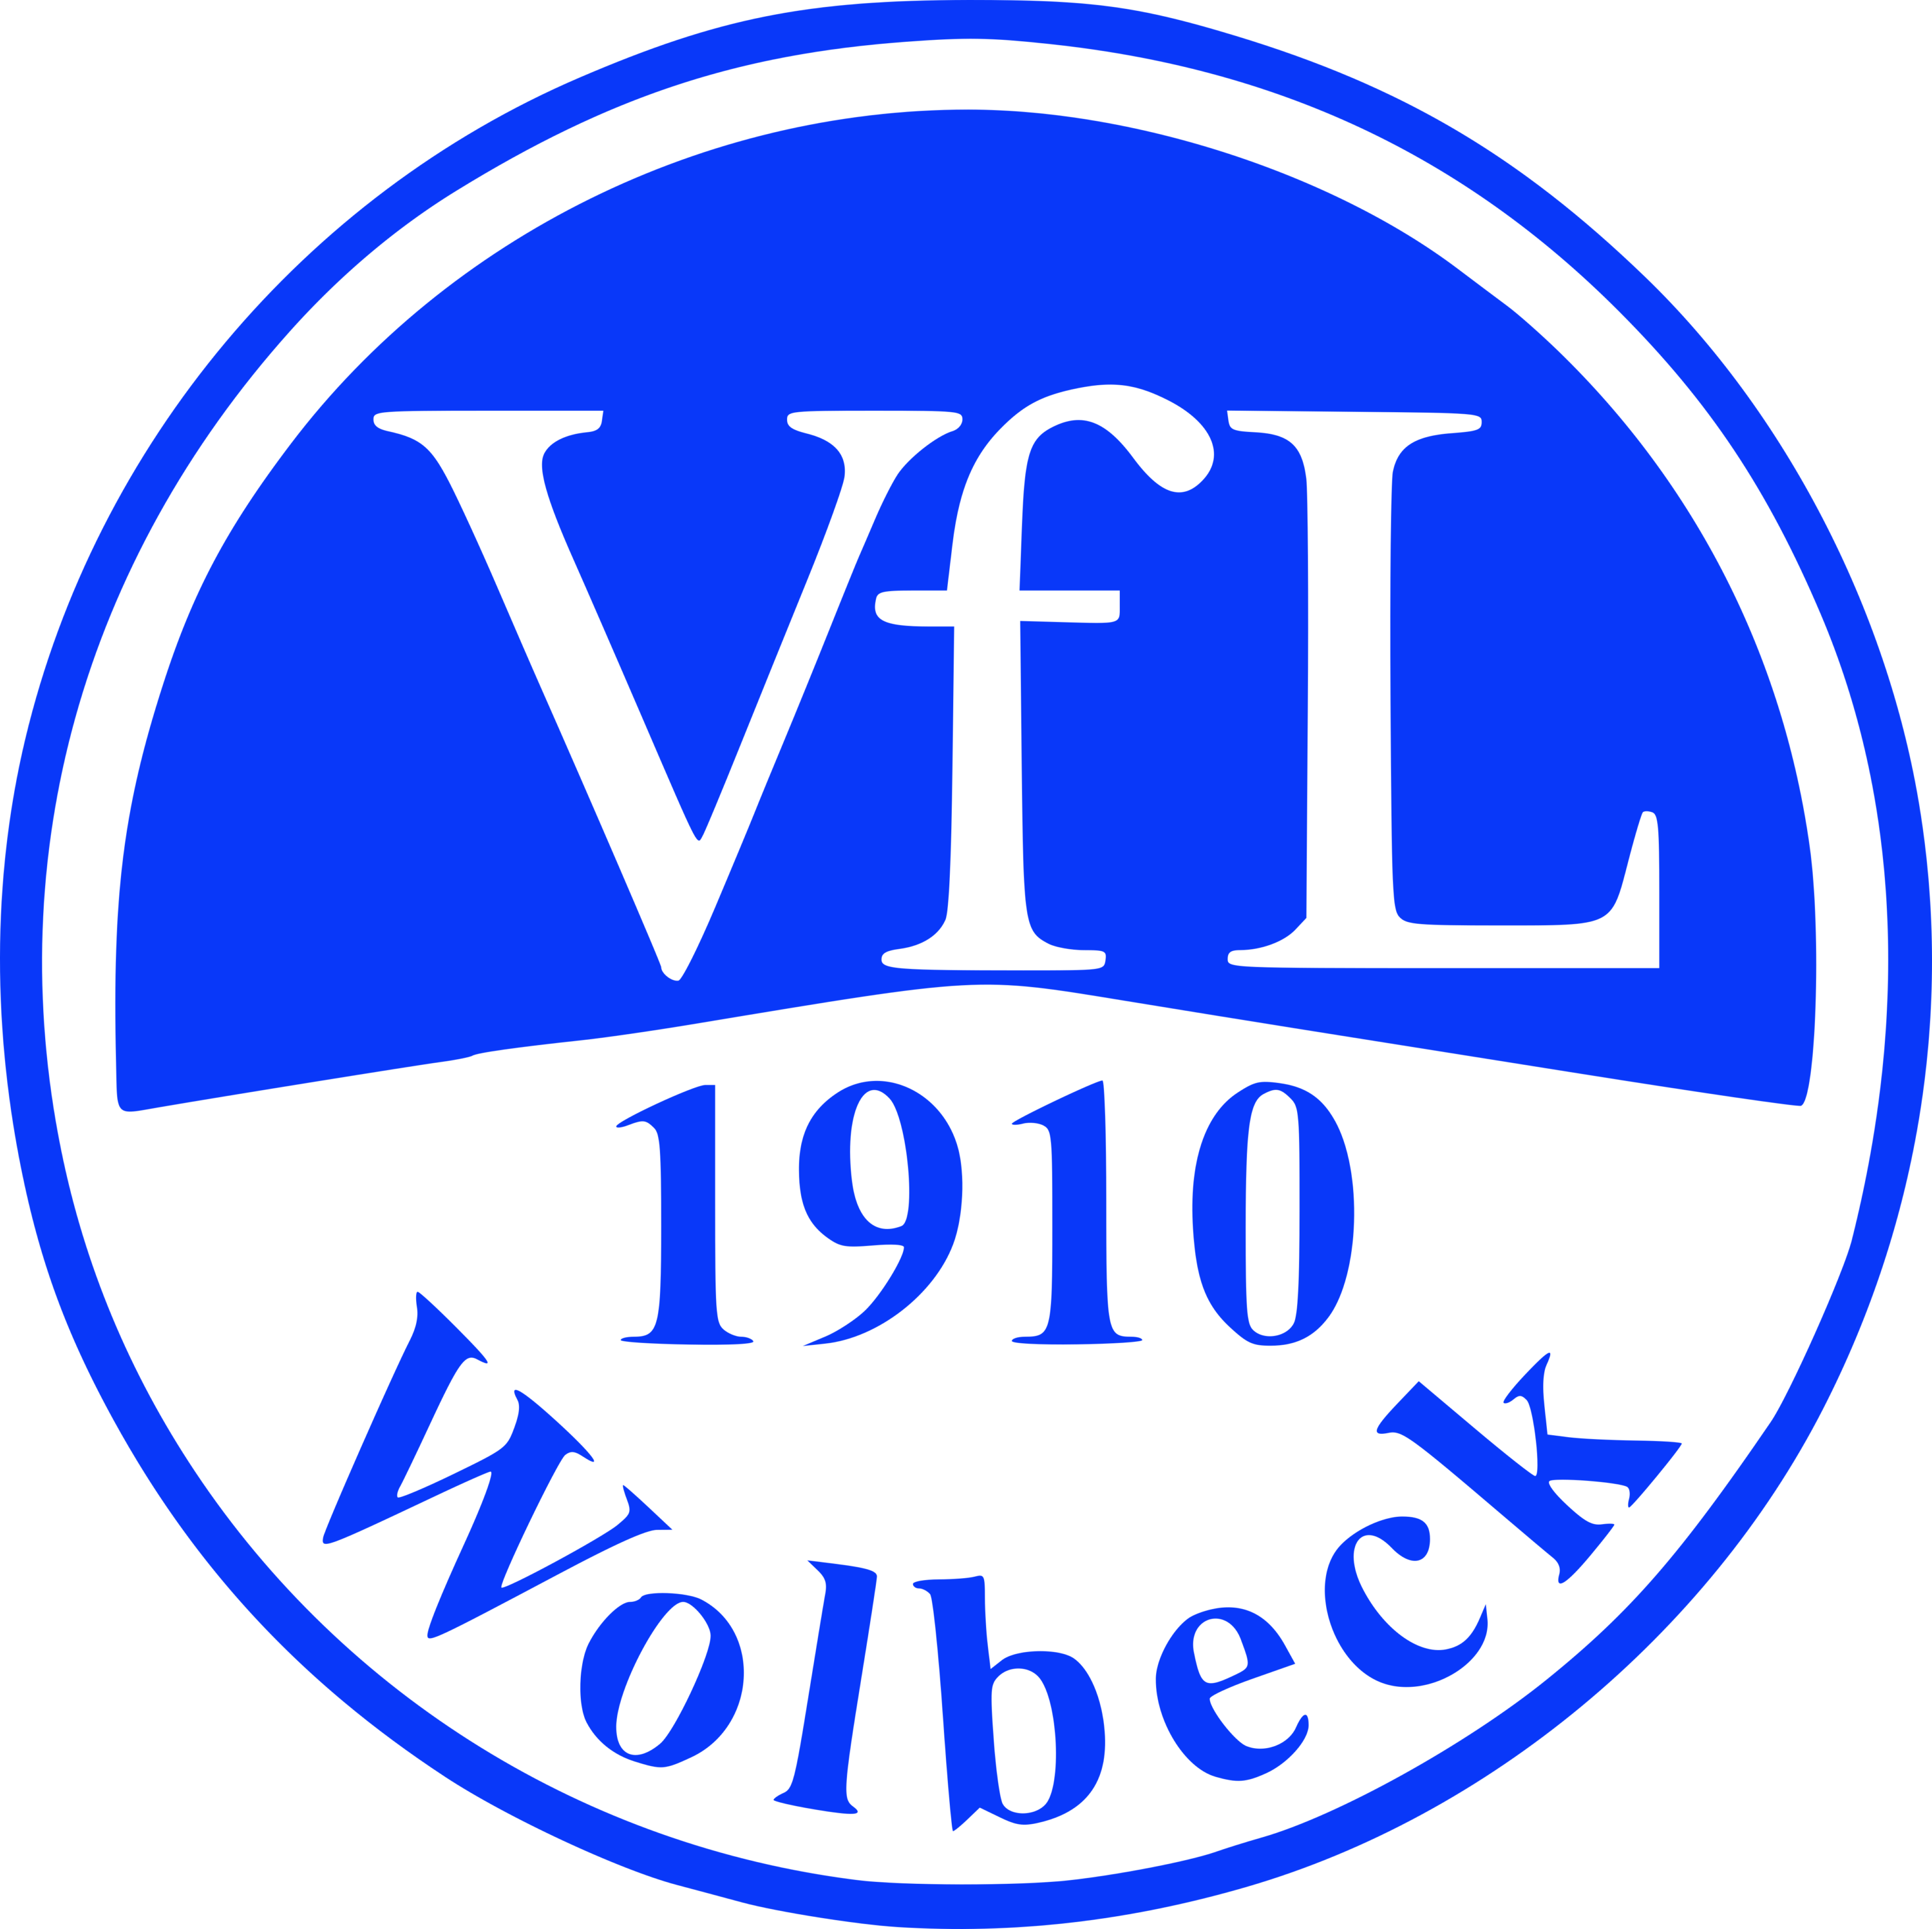 VfL Wolbeck Logo